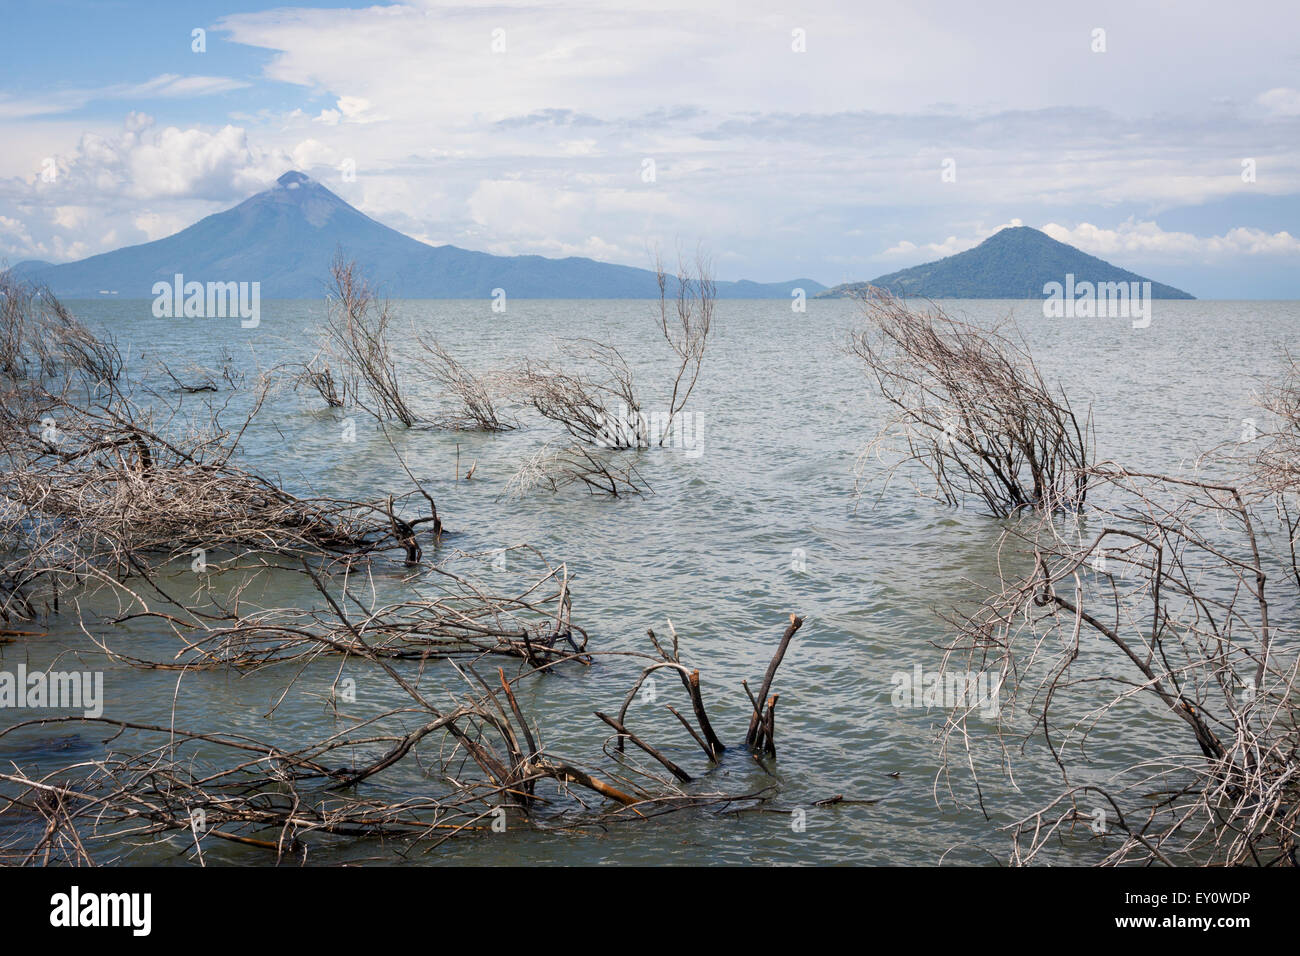 Momotombo und Momotombito Vulkane aus Lake Managua, Nicaragua Stockfoto